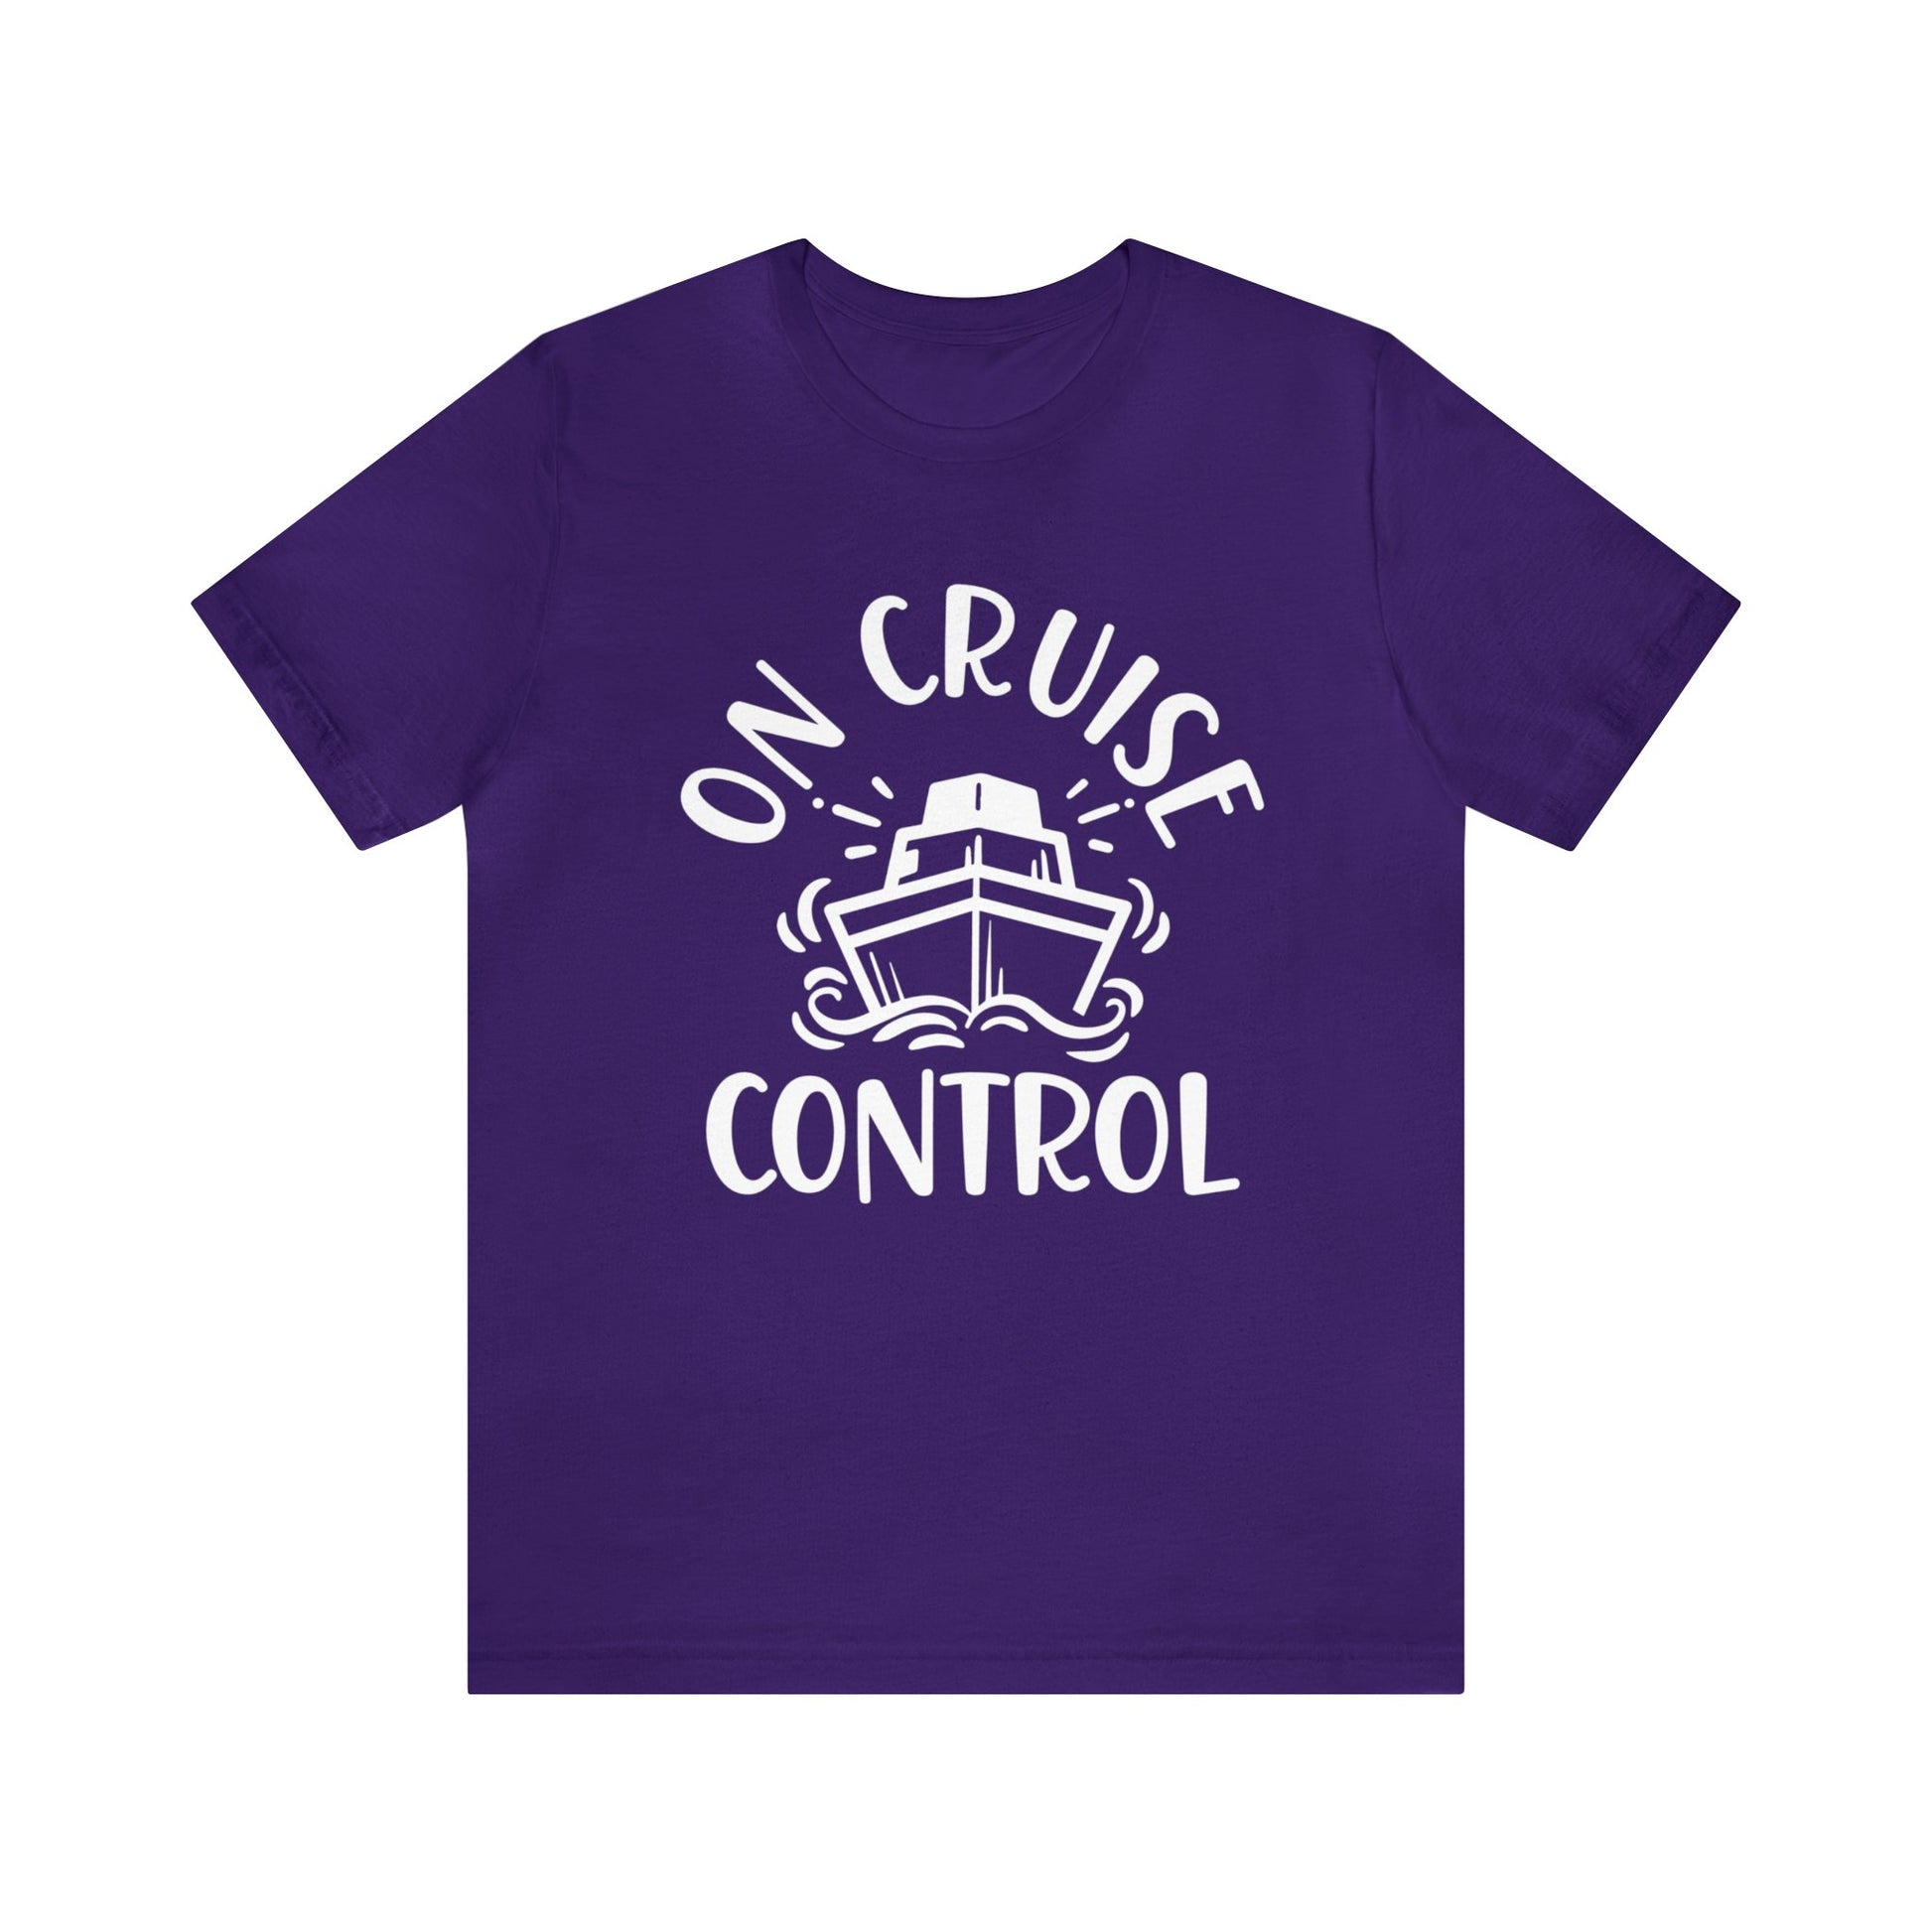 On Cruise Control in Team Purple